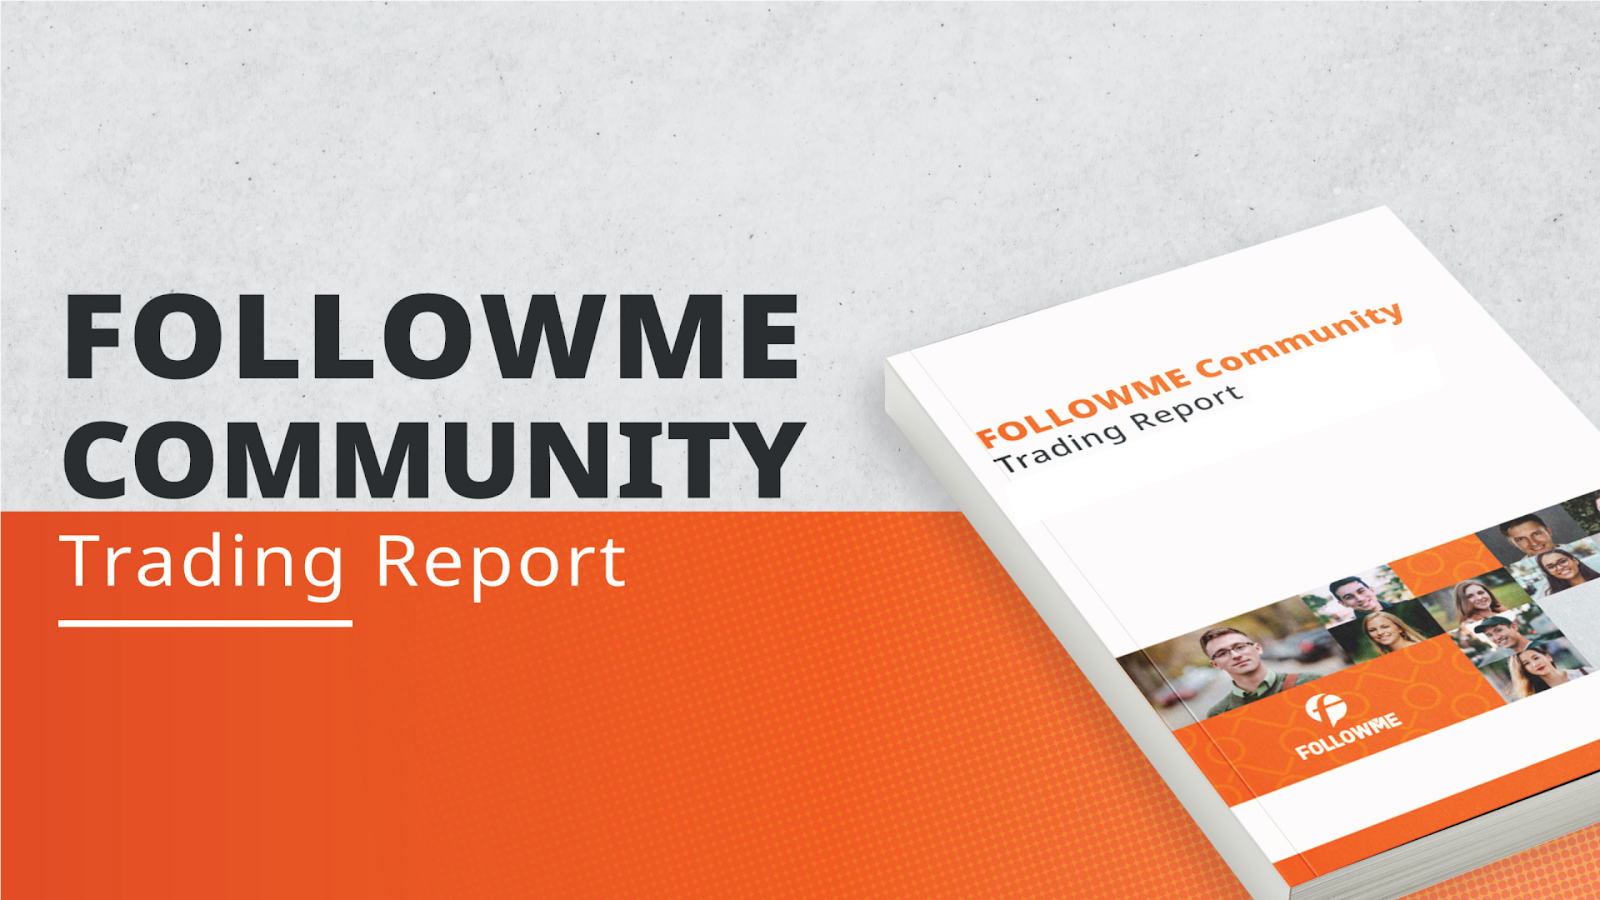 FOLLOWME Community Trading Overview - November 2020